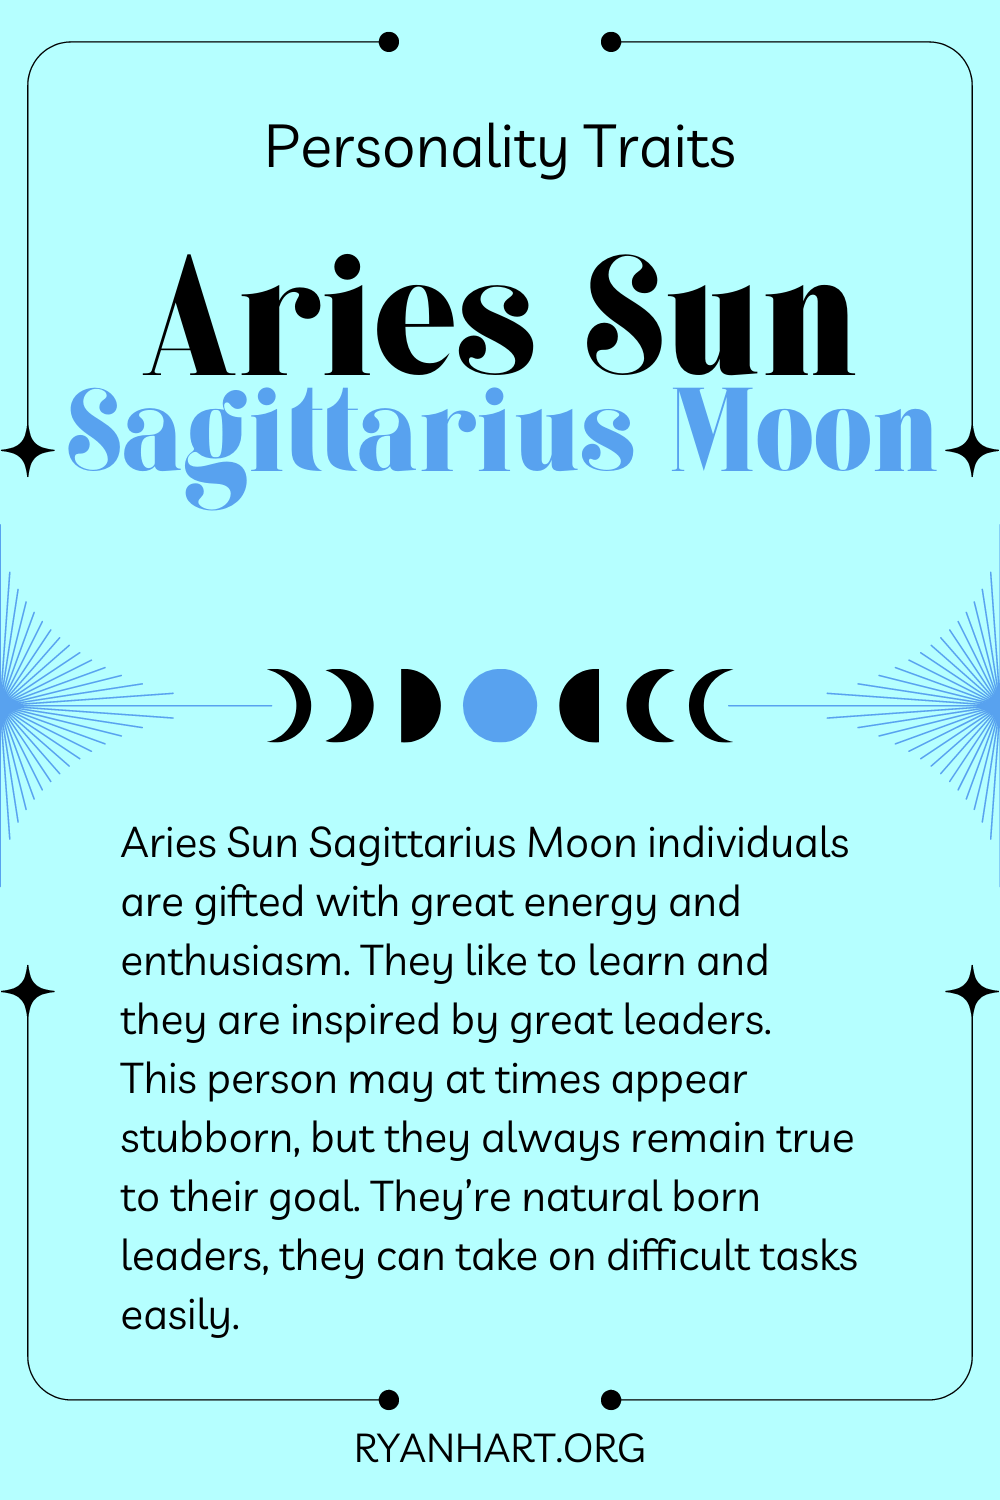  Aries Sun Sagittarius လ စရိုက်လက္ခဏာများ